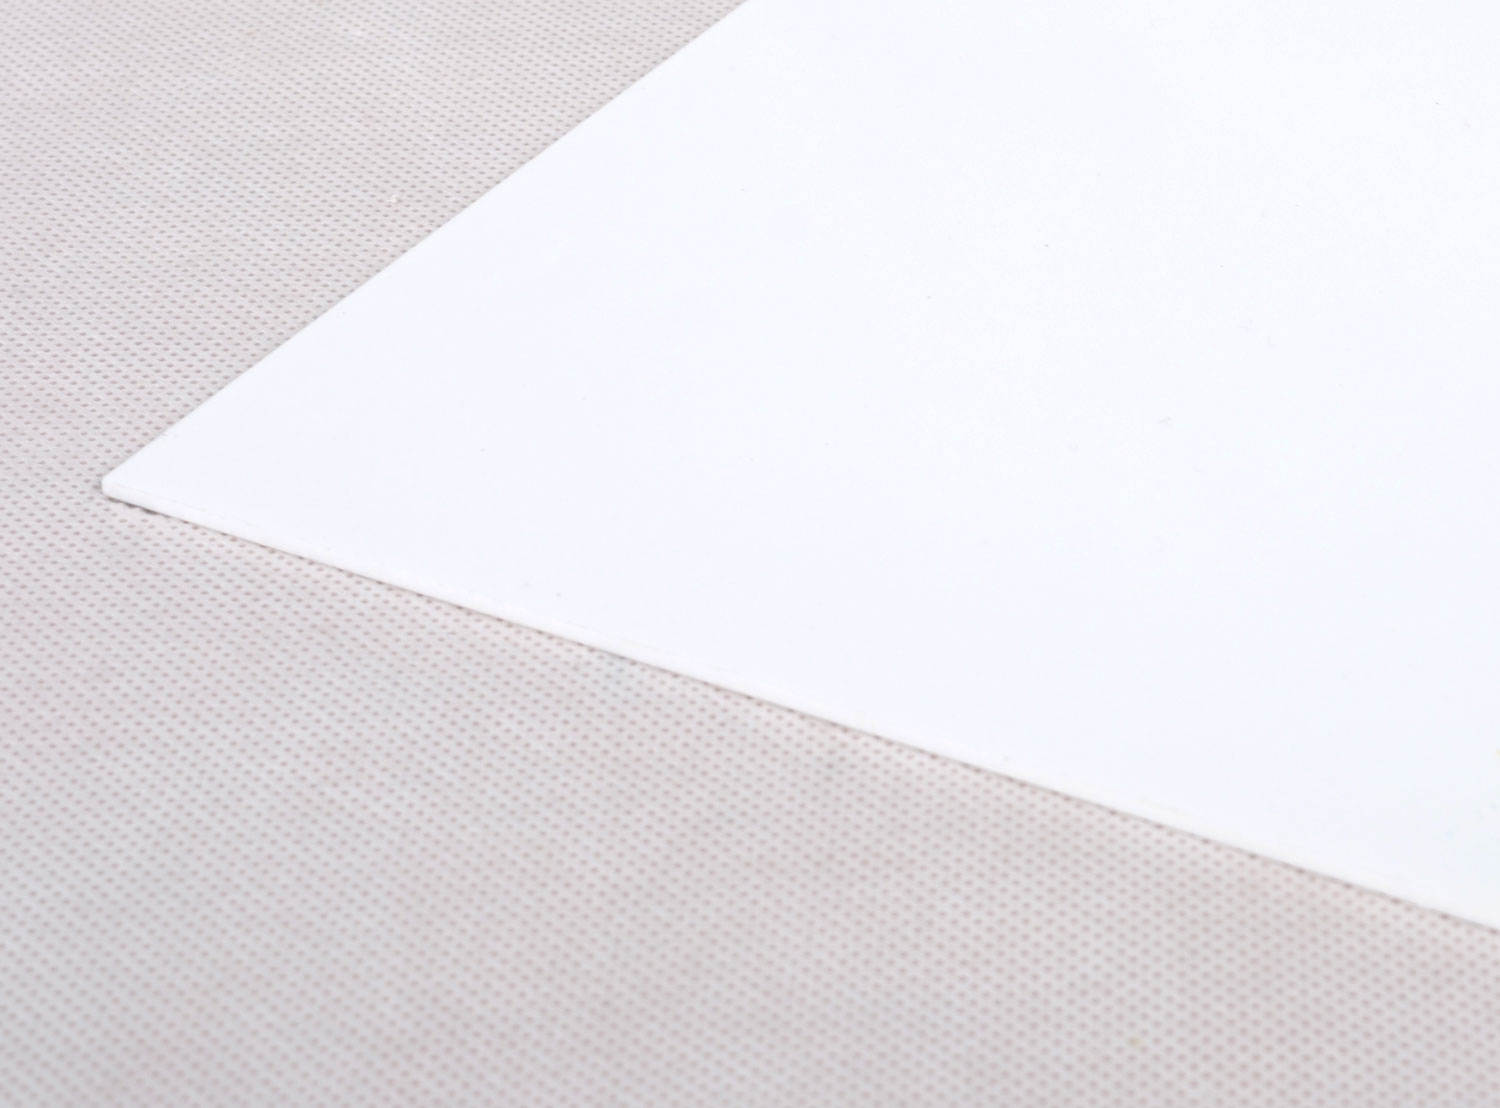 5 & 10 1mm A5 White Polystyrene High Impact Plasticard HIPS Sheet Packs of 1 3 